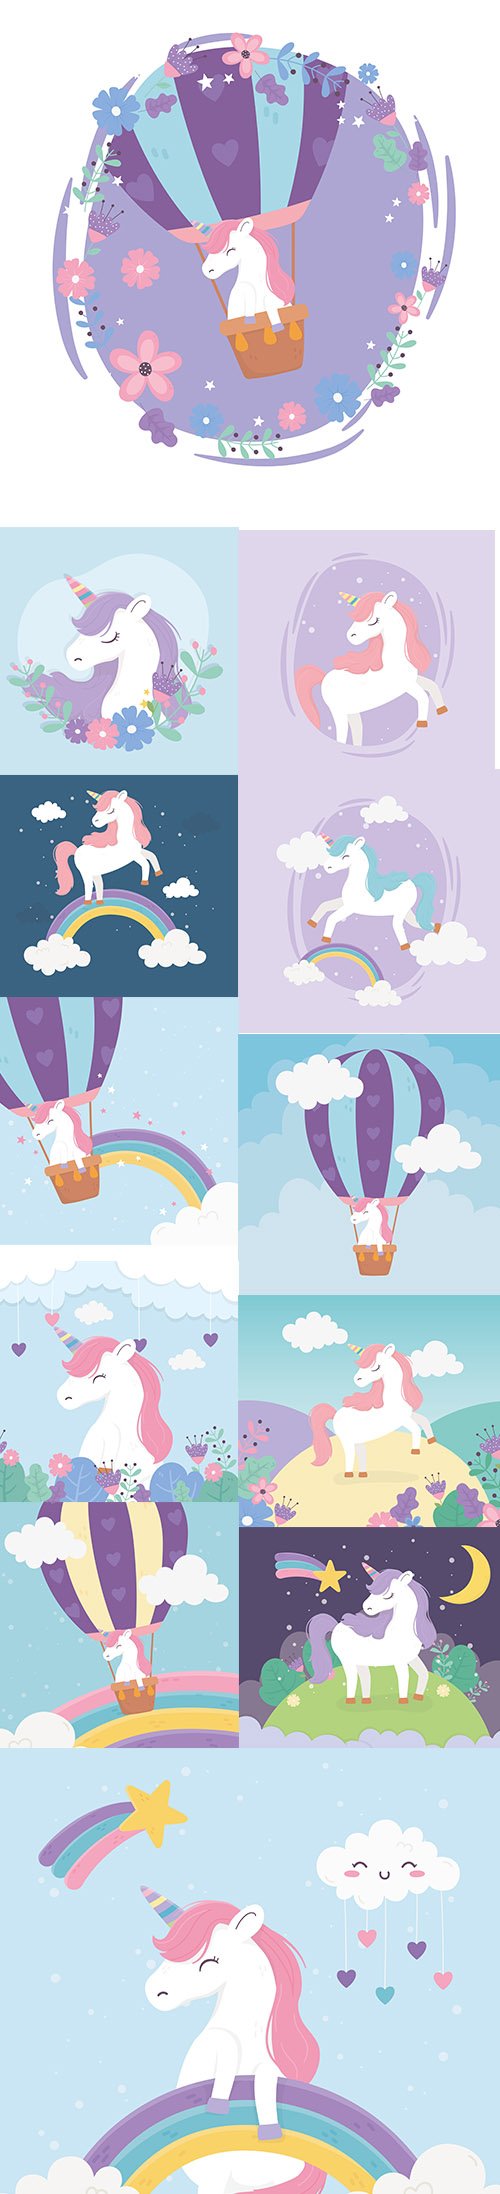 Happy Unicorn with Rainbows Illustrations Set